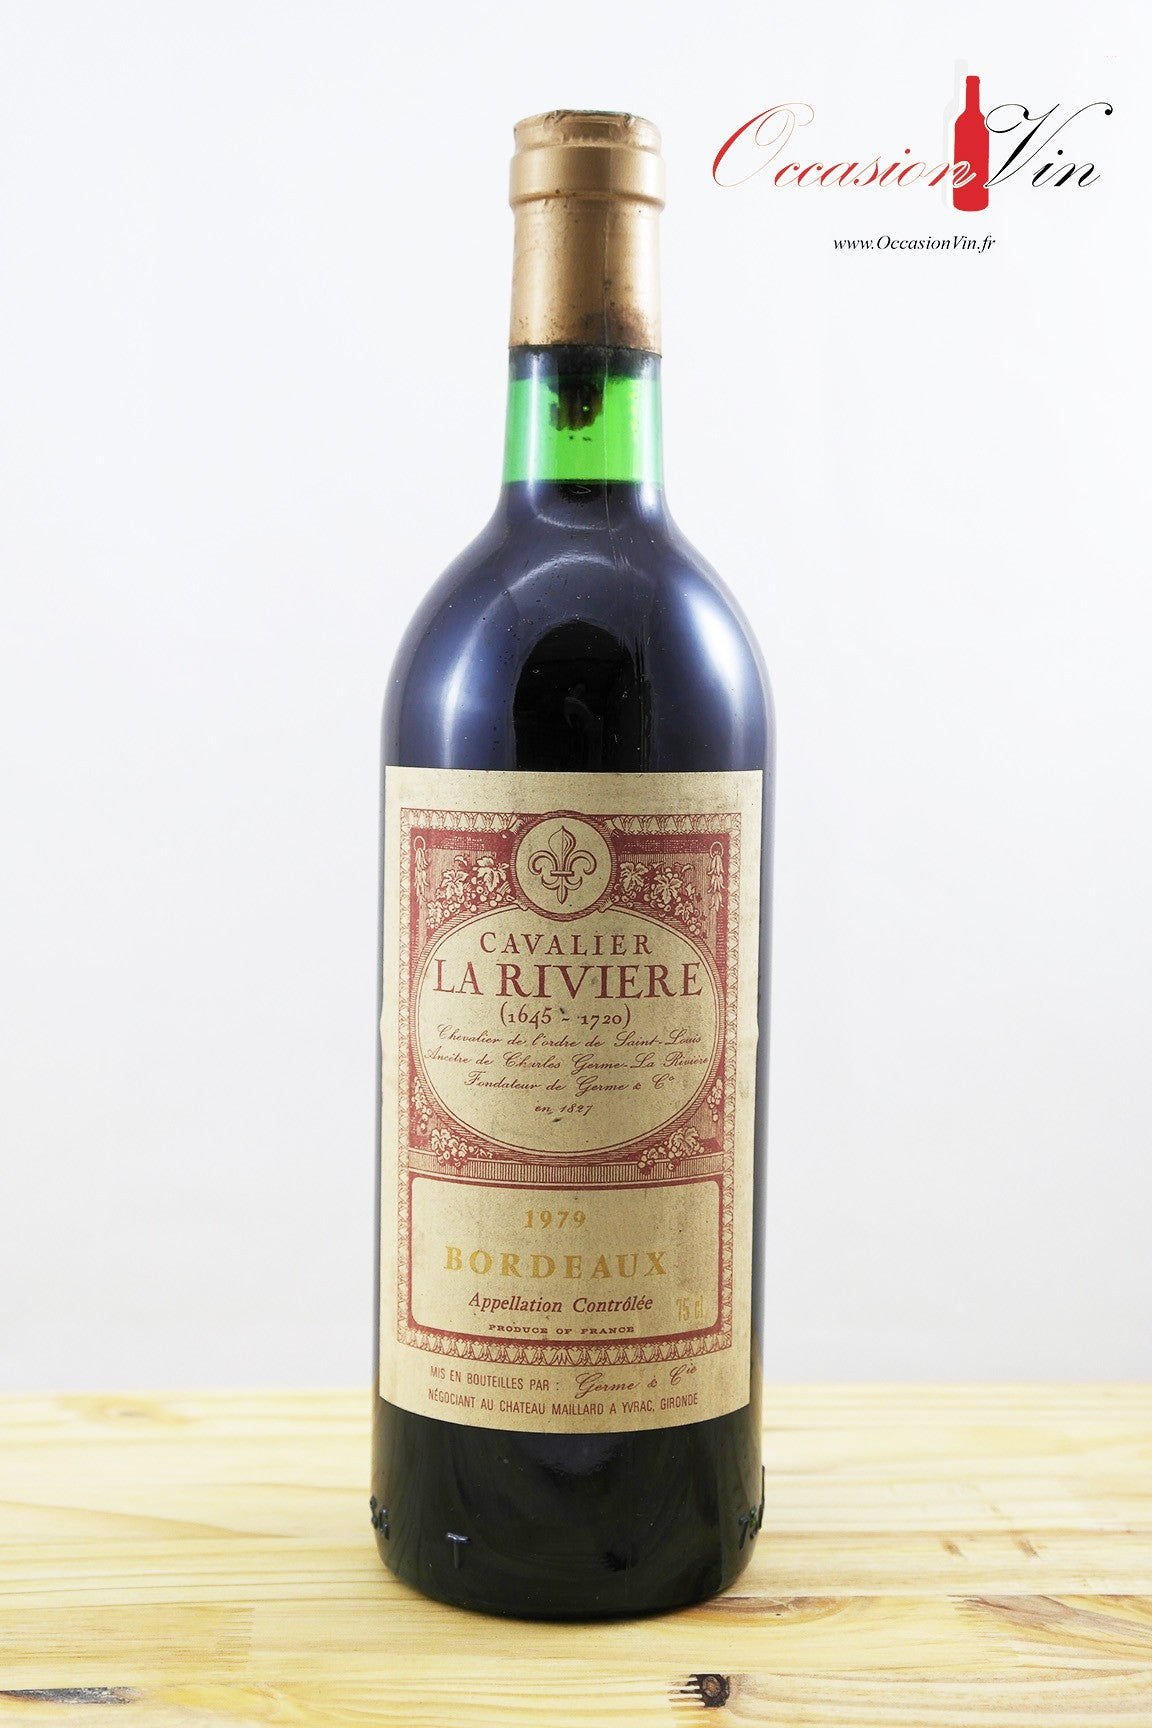 Cavalier La Riviere Vin 1979